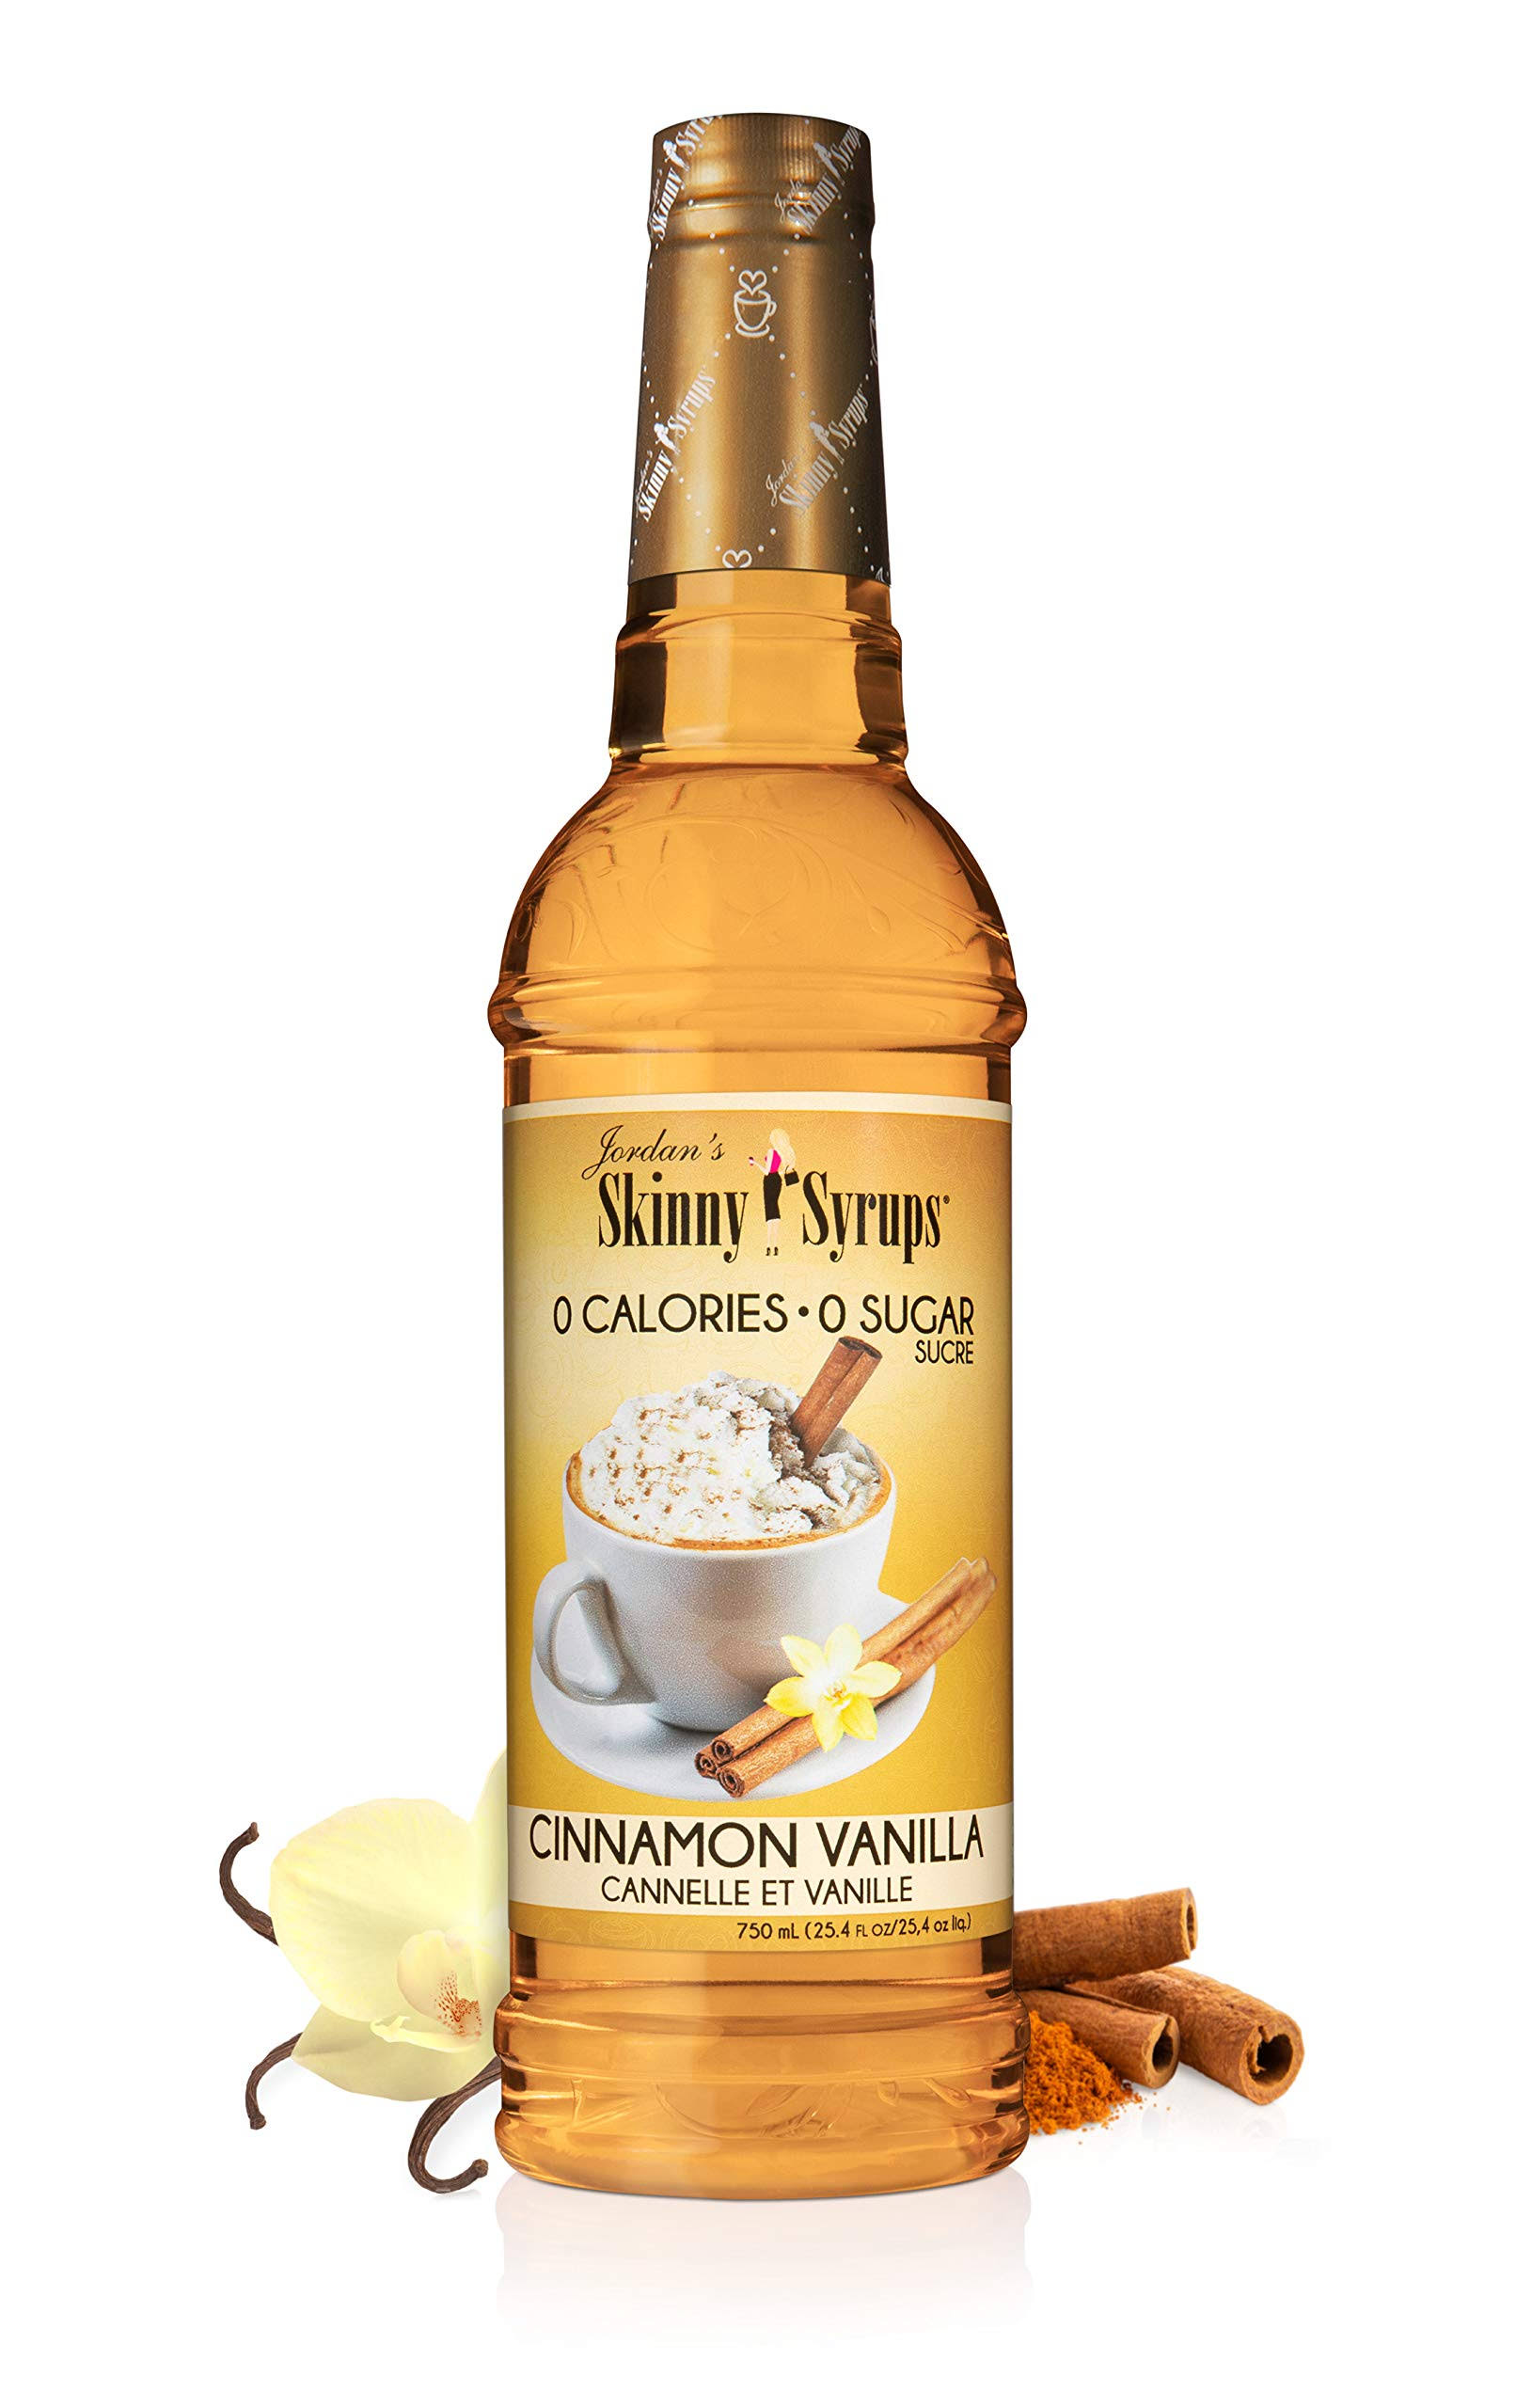 Jordan's Sugar Free Skinny Syrups - Cinnamon Vanilla, 25.4oz